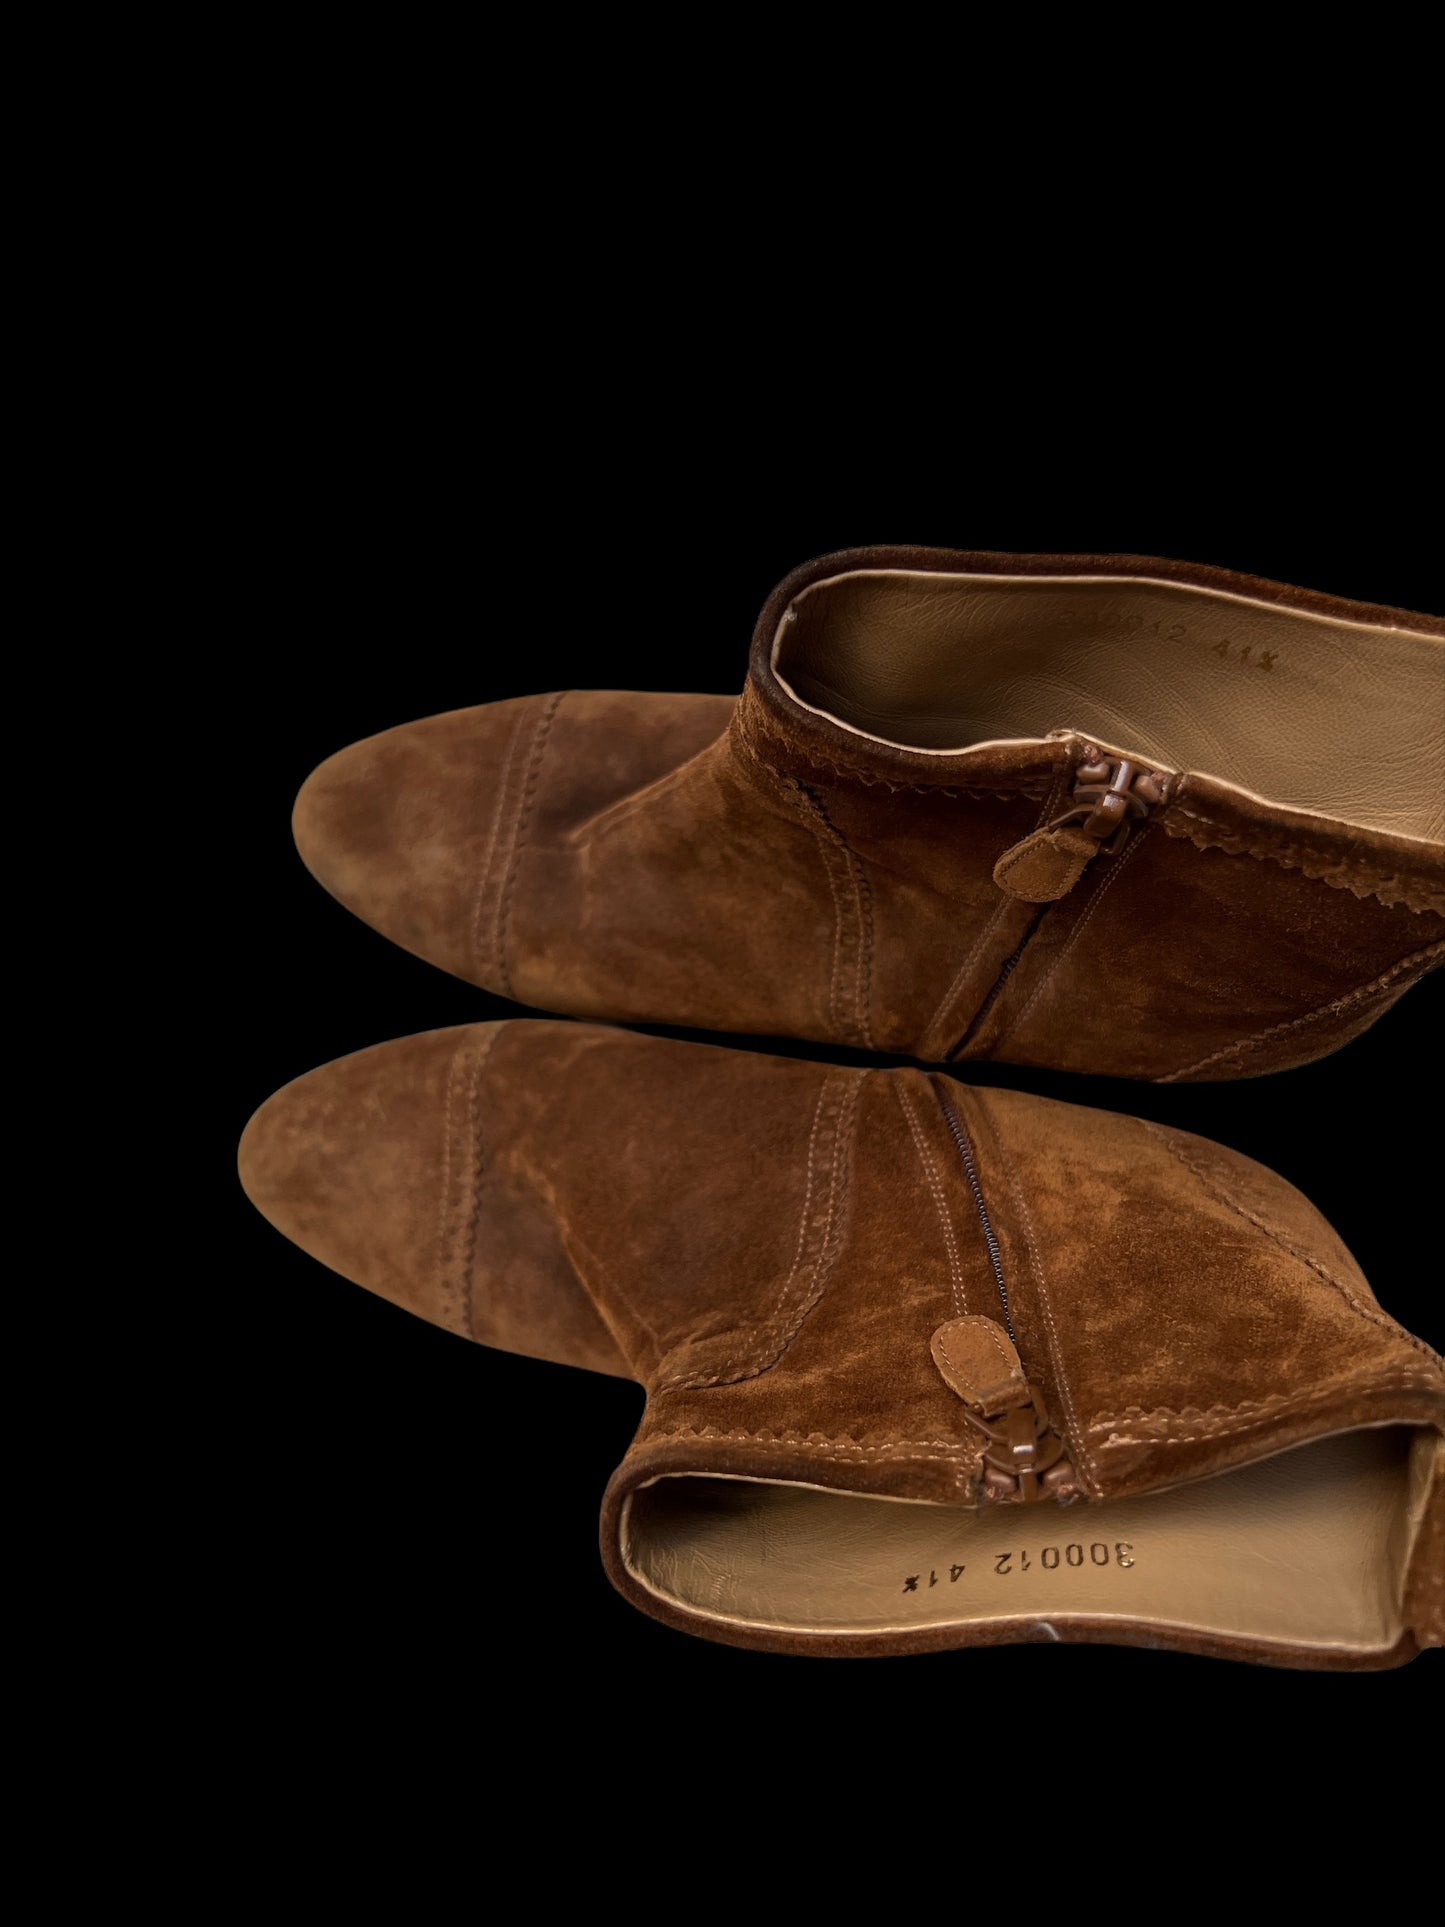 Brown Wedge Heeled Boots - 10